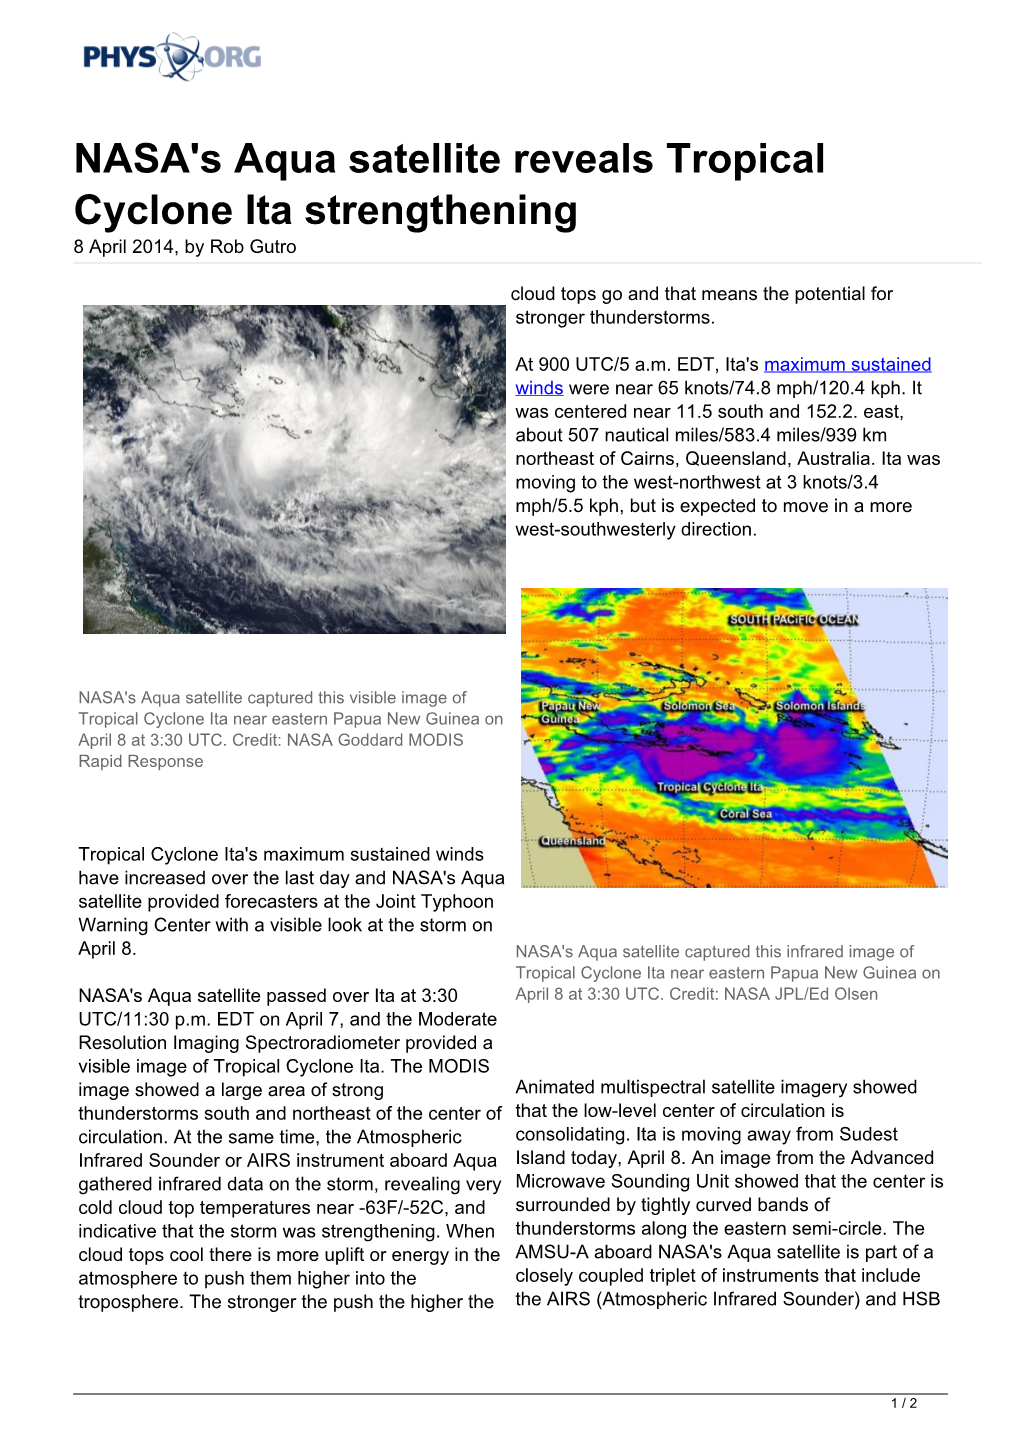 NASA's Aqua Satellite Reveals Tropical Cyclone Ita Strengthening 8 April 2014, by Rob Gutro